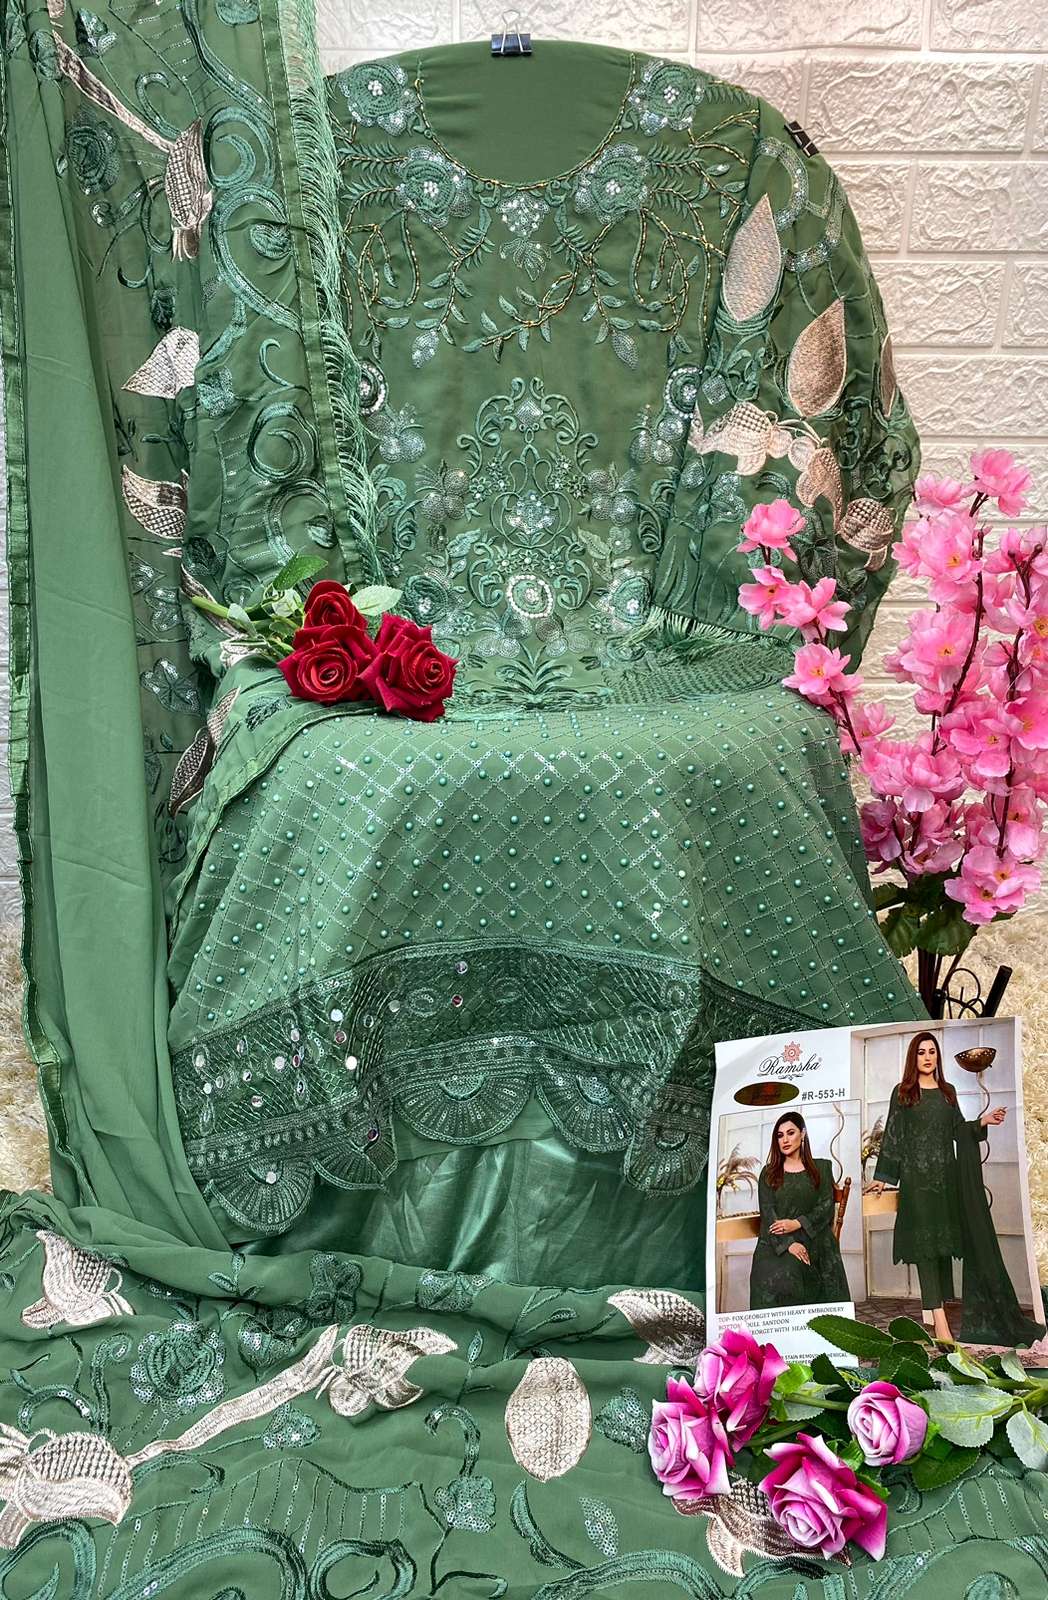 ramsha 553 series gorgeous look designer pakistani salwar kameez wholesaler surat 